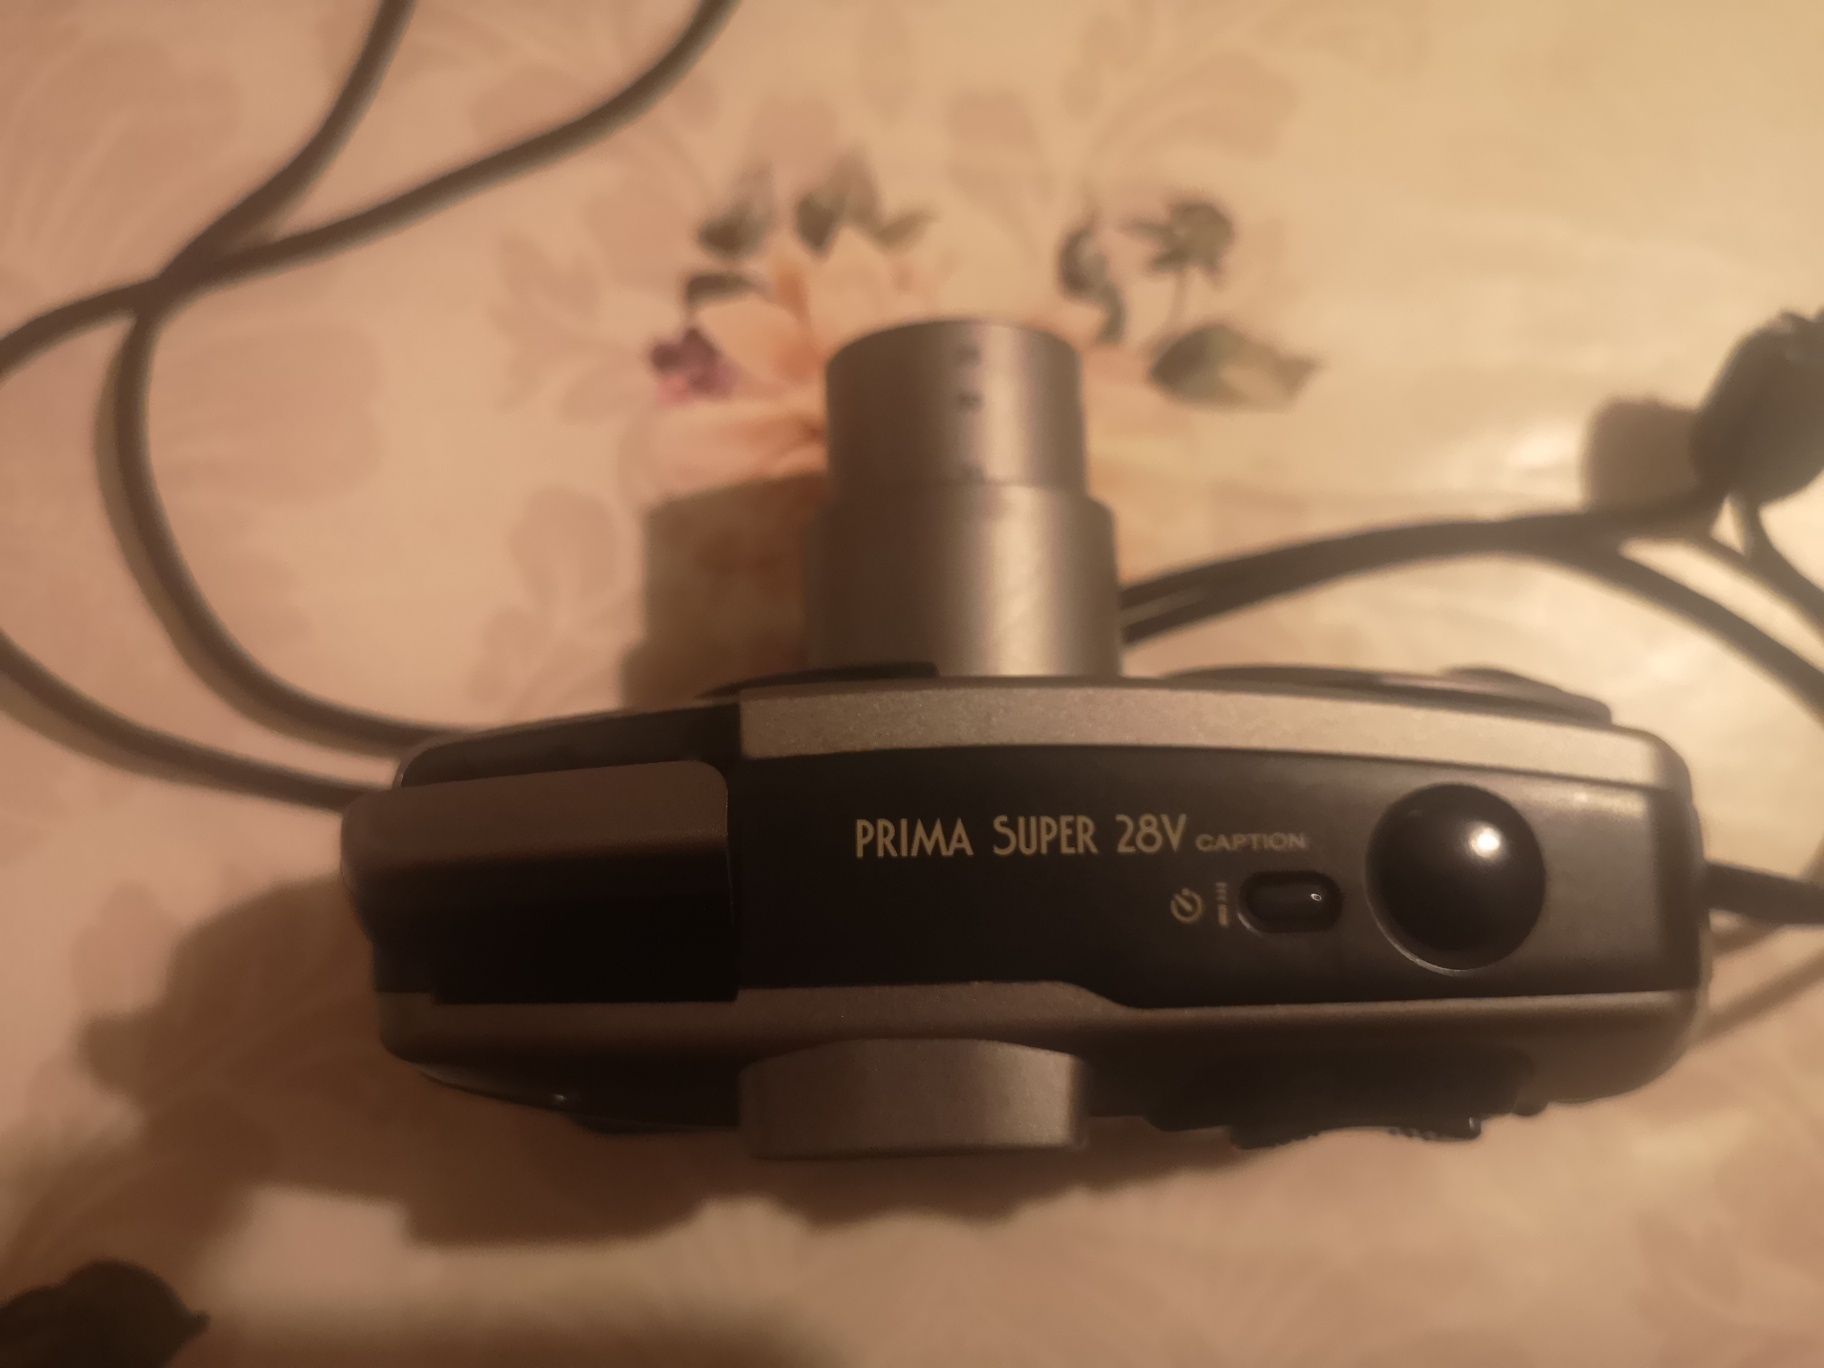 Aparat analogowy Canon Prima Super 28v